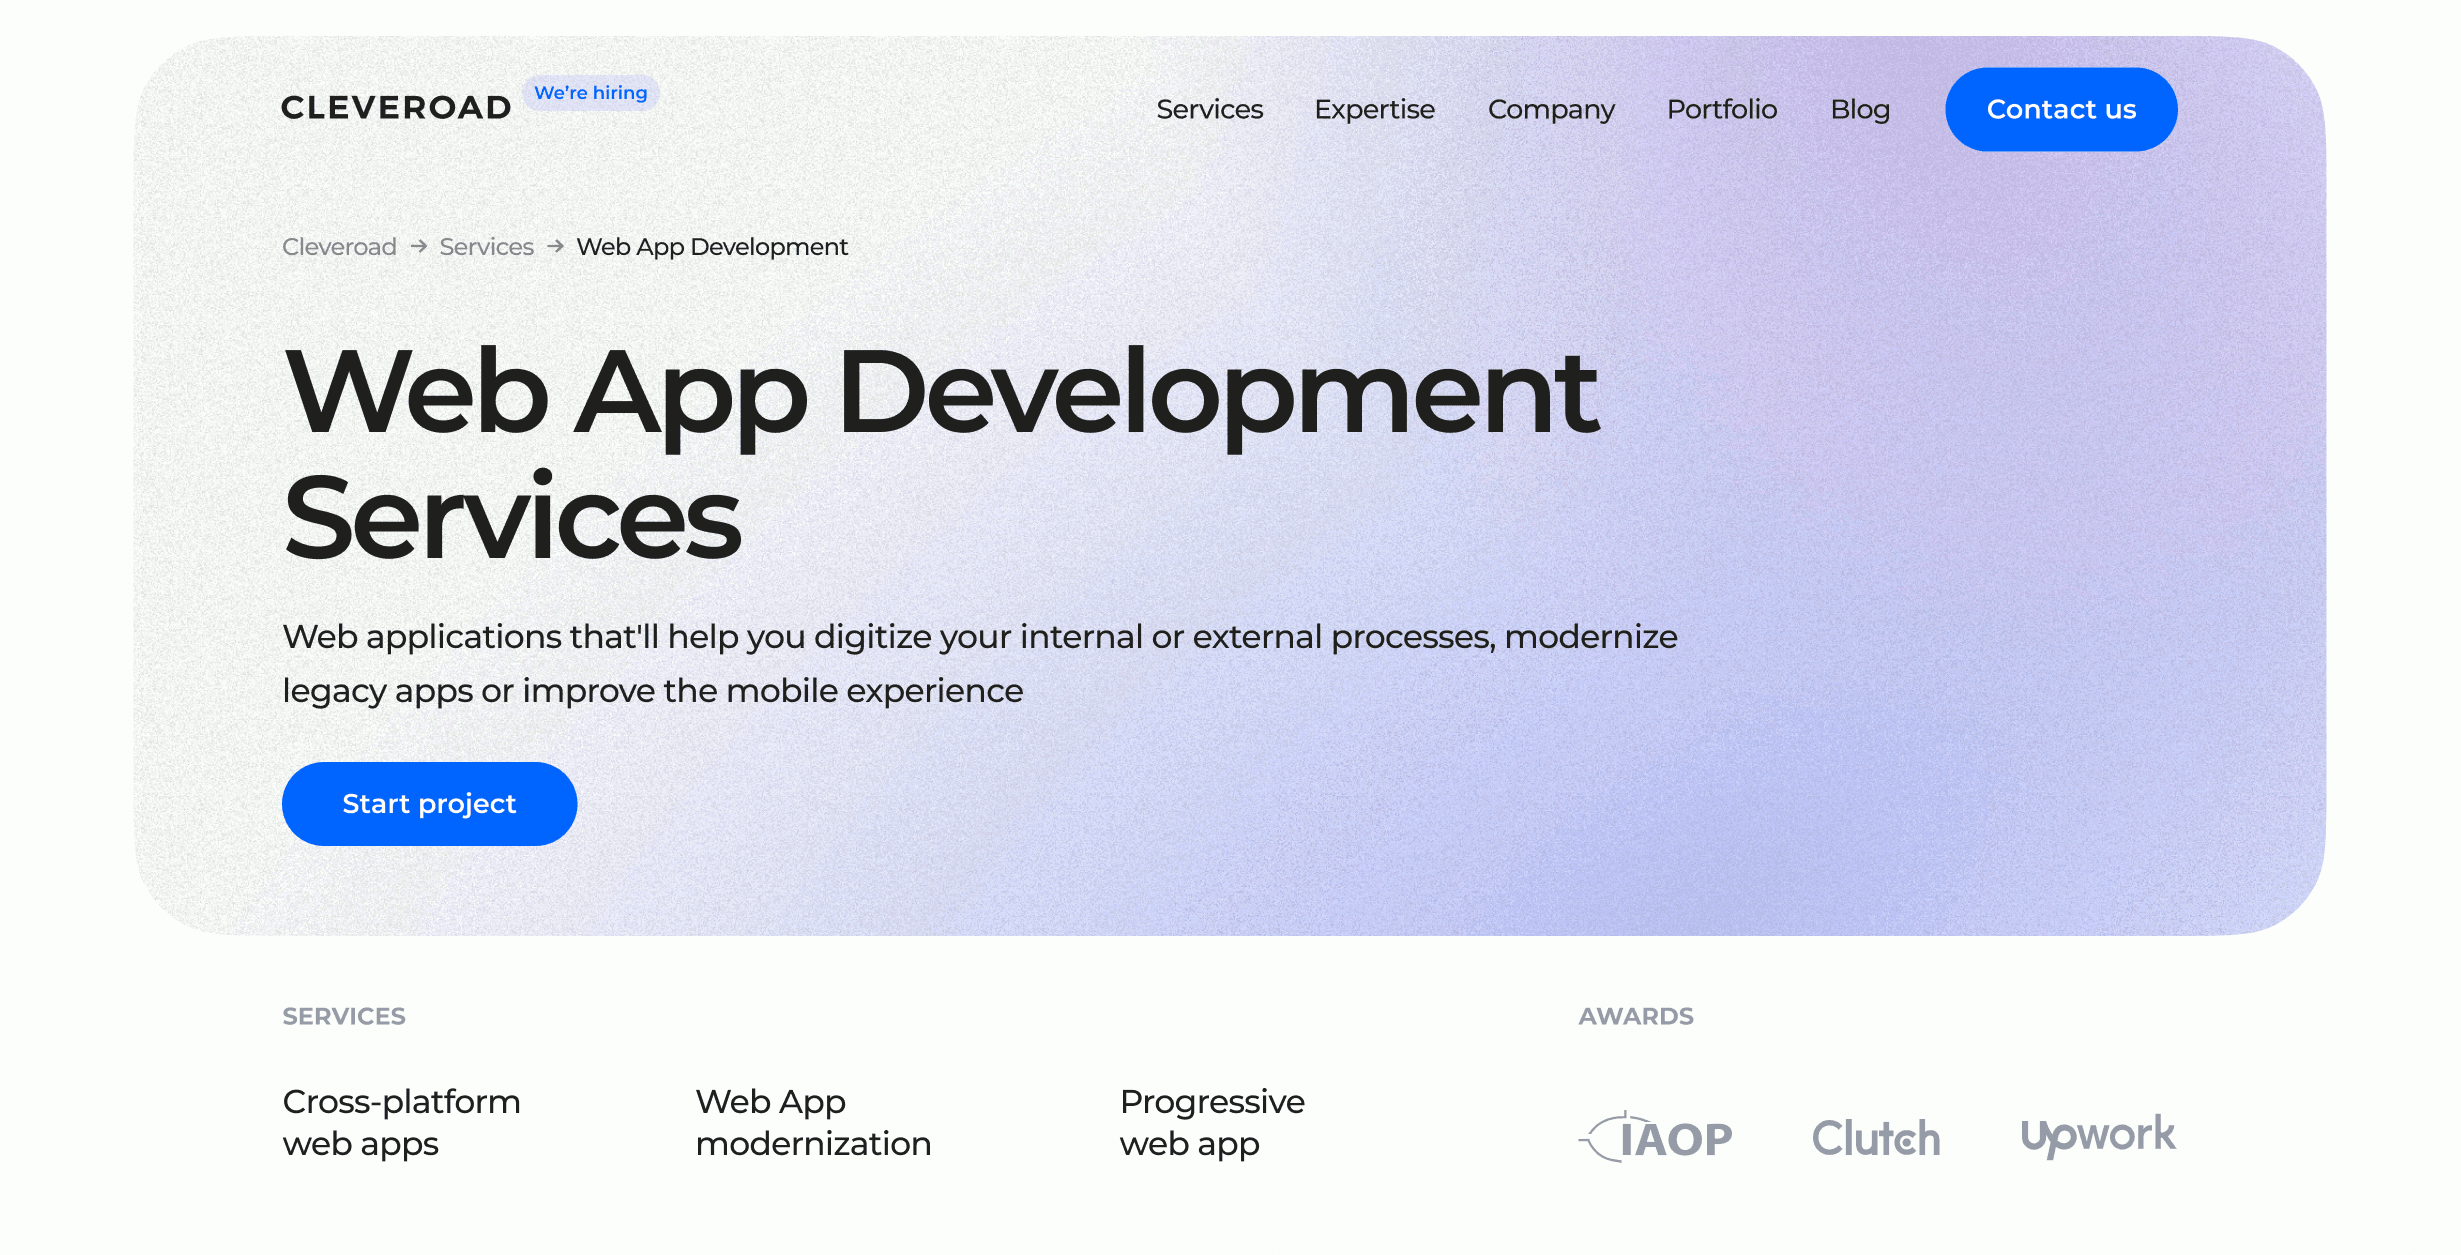 Product Web Application Development Services image